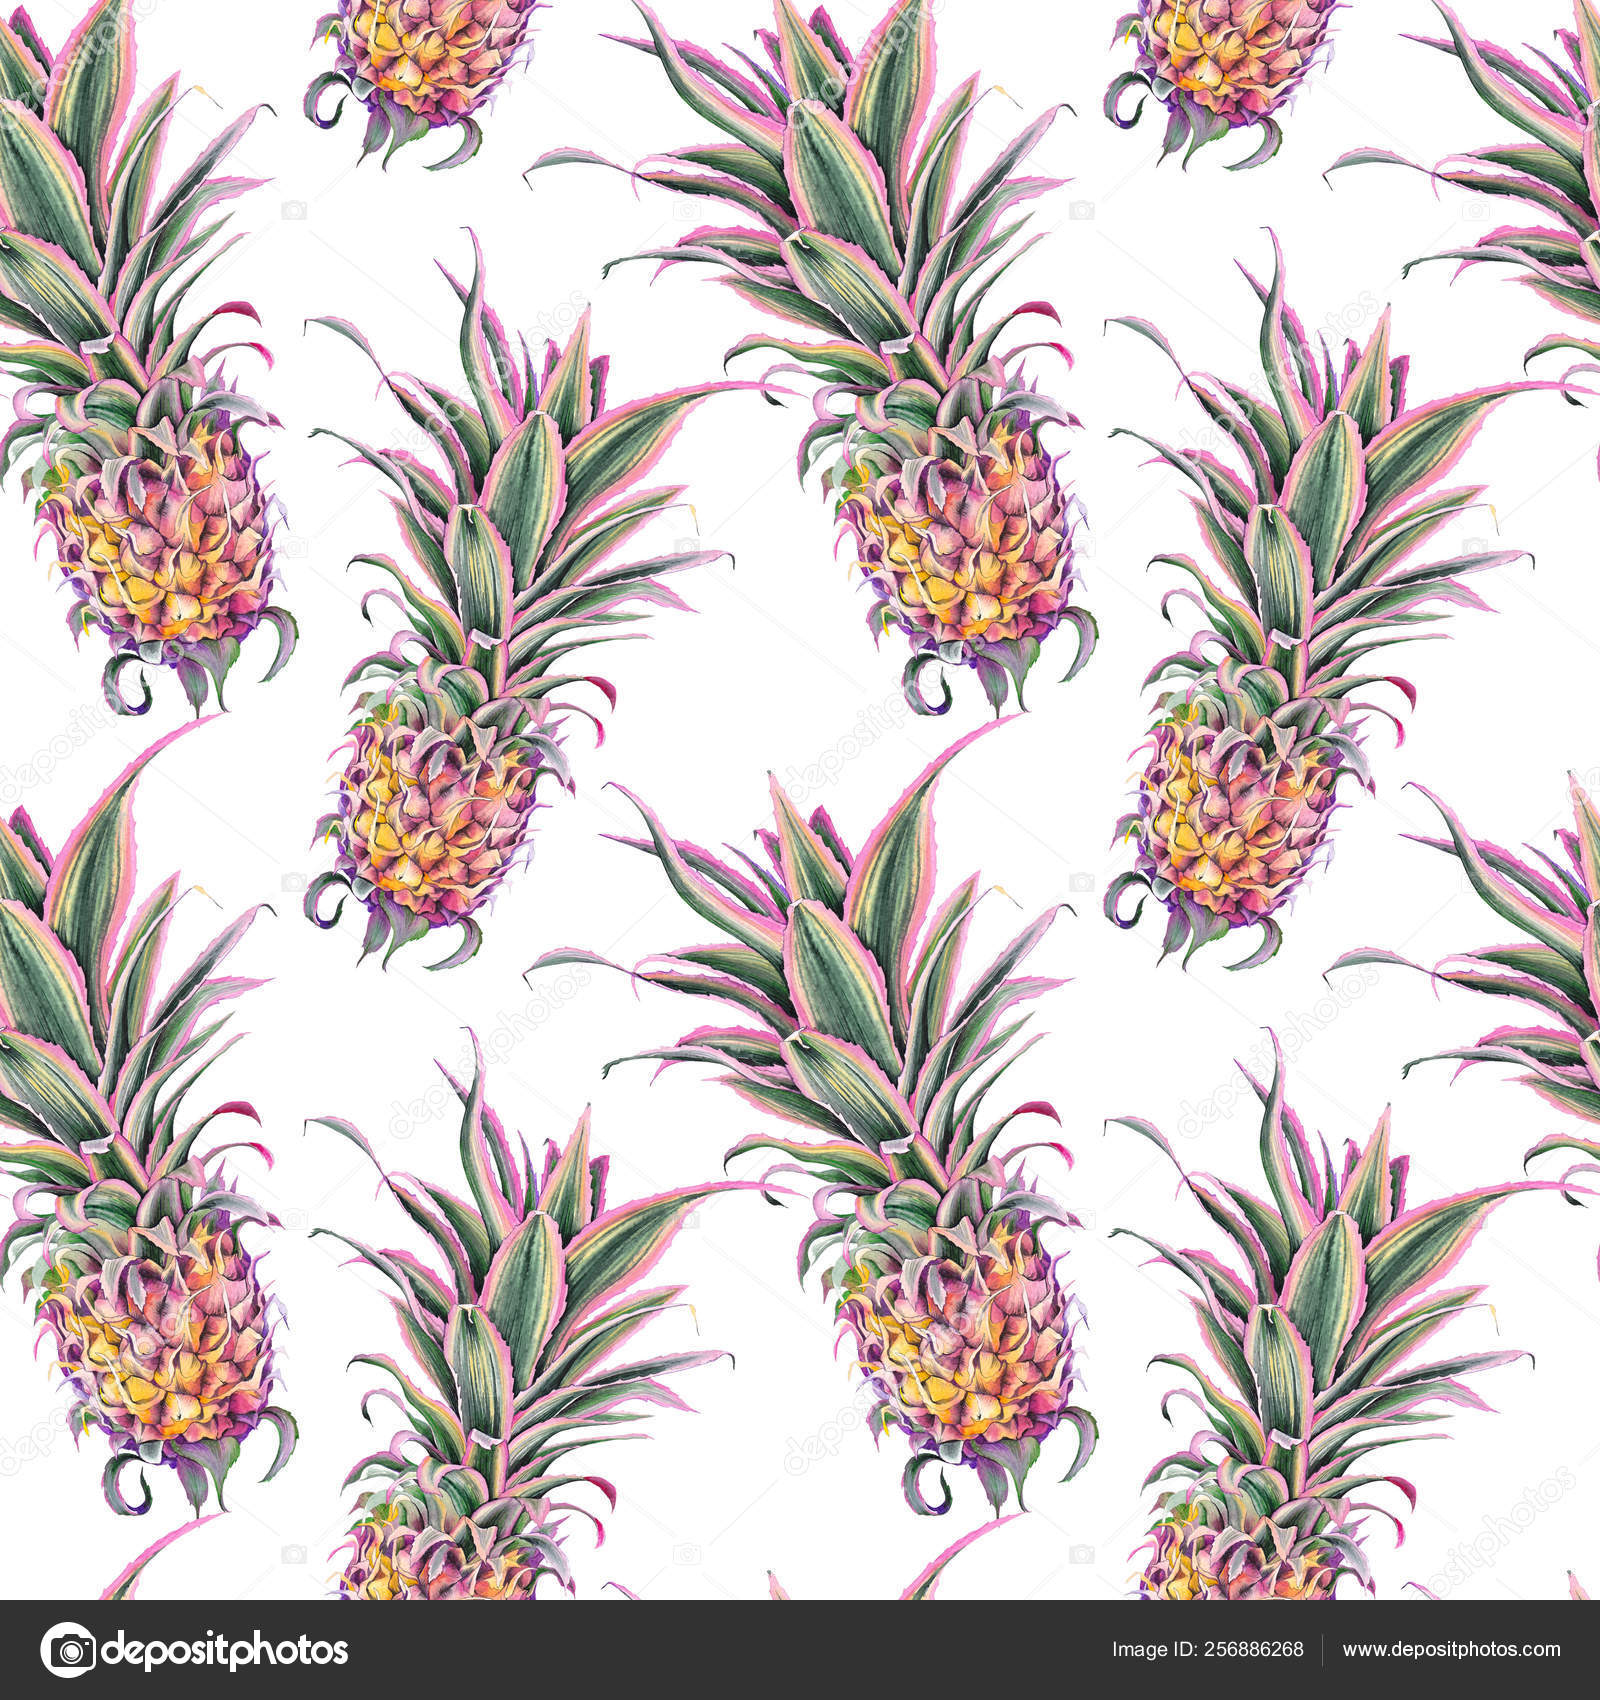 Cute Pineapple Wallpapers for Desktop Free Download  PixelsTalkNet